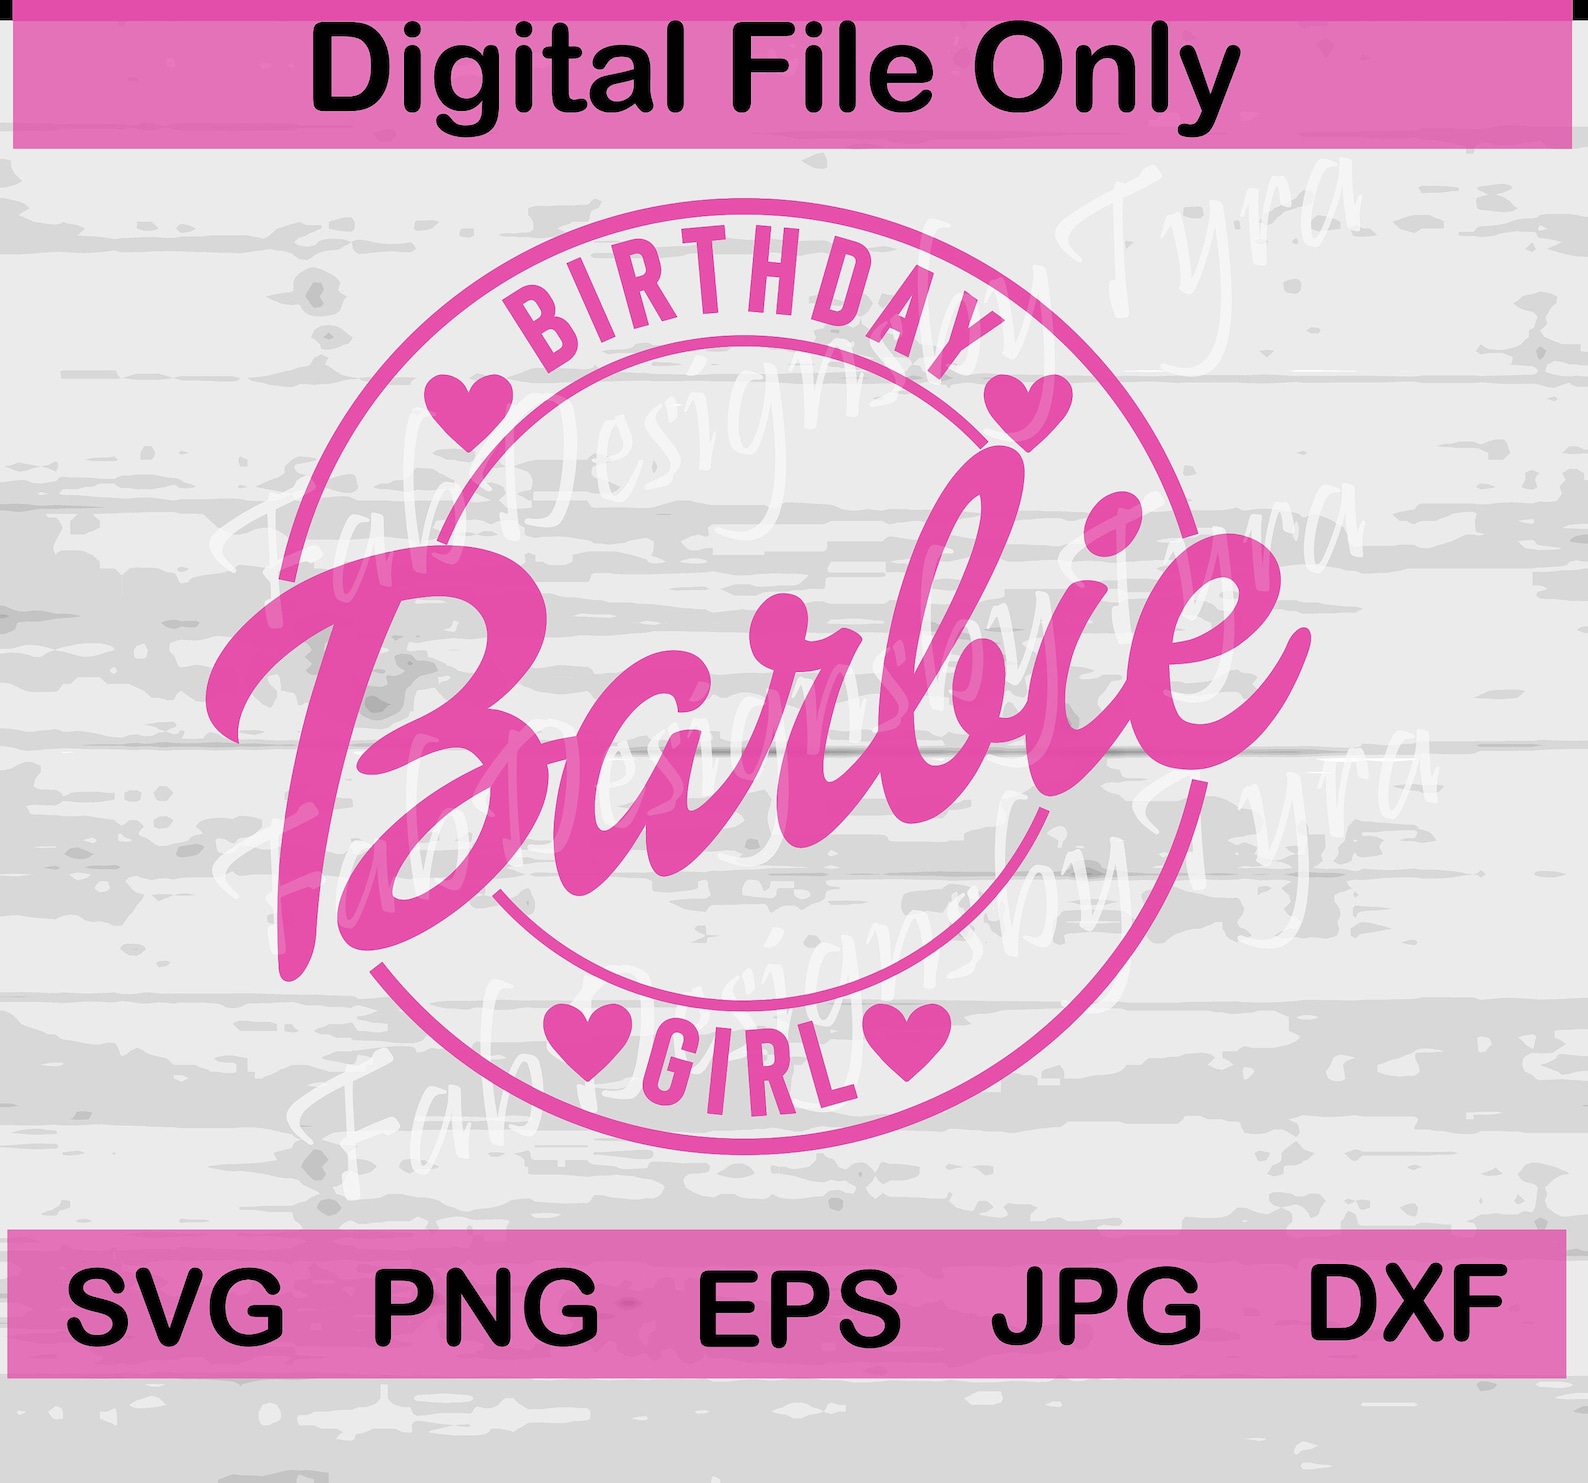 Lets go barbie birthday girl Barbie Logo Barbie SVG for | Etsy